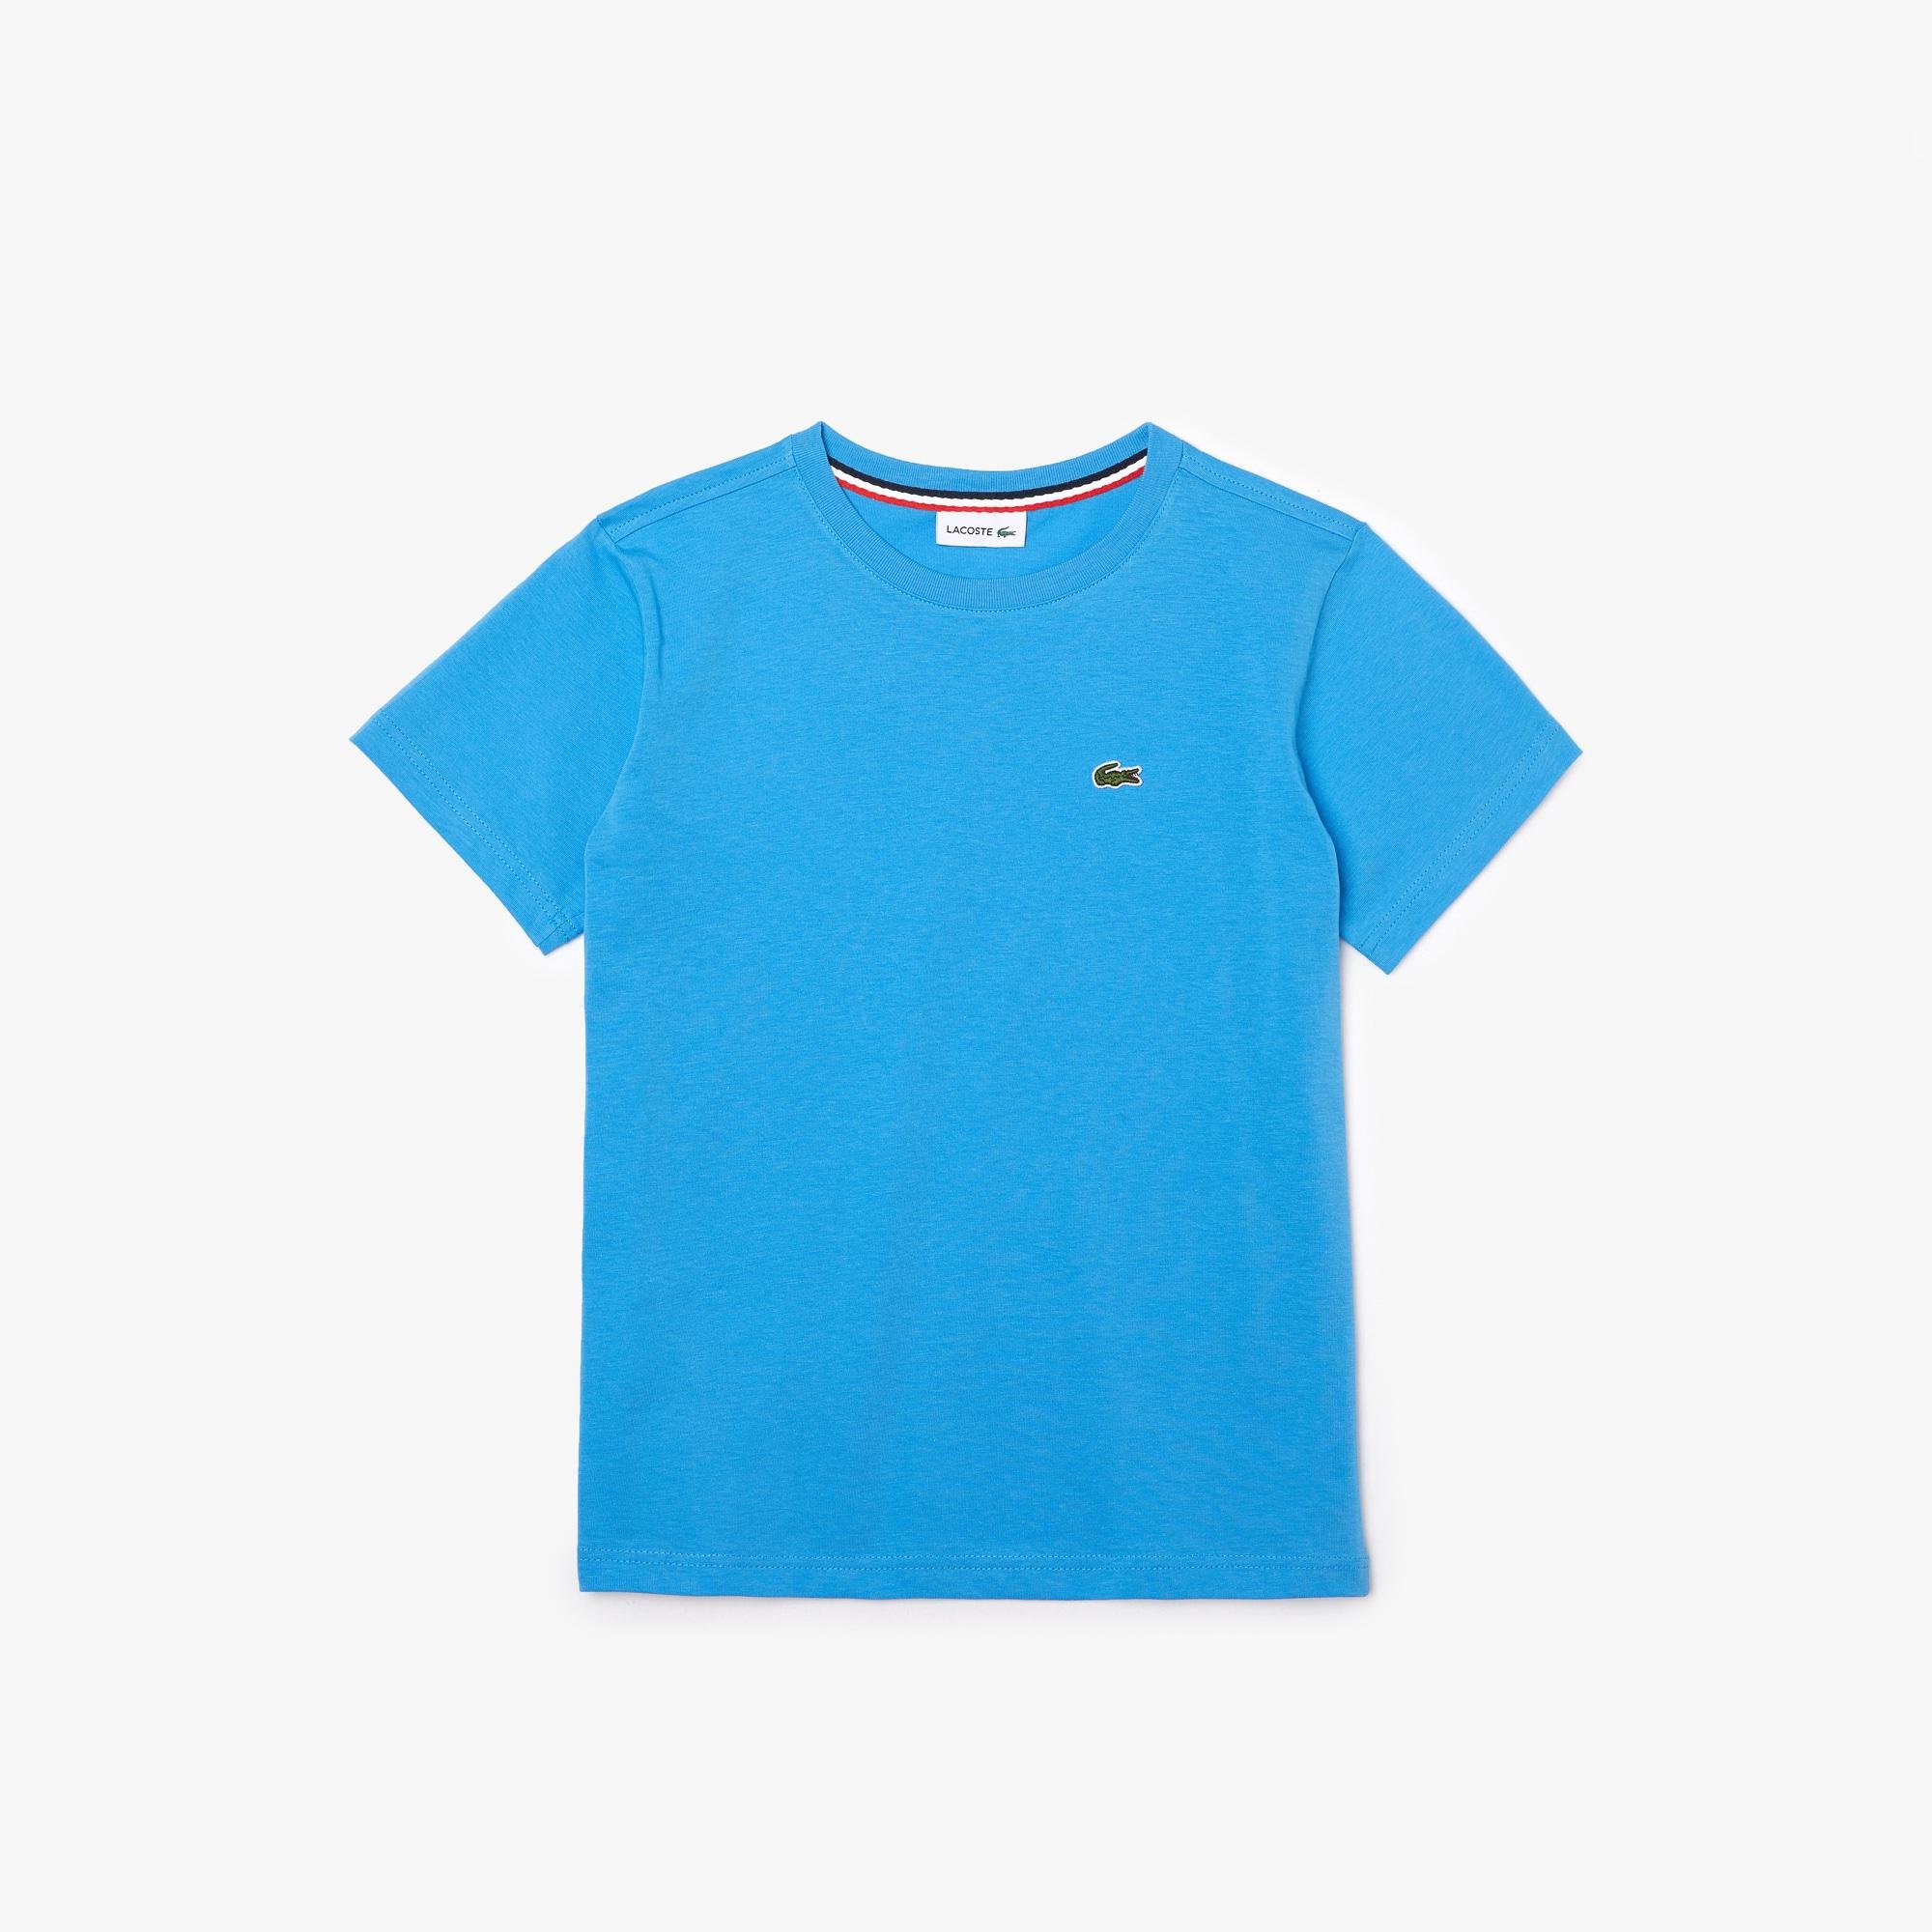 Lacoste Kid's Crew Neck Cotton Jersey T-shirt